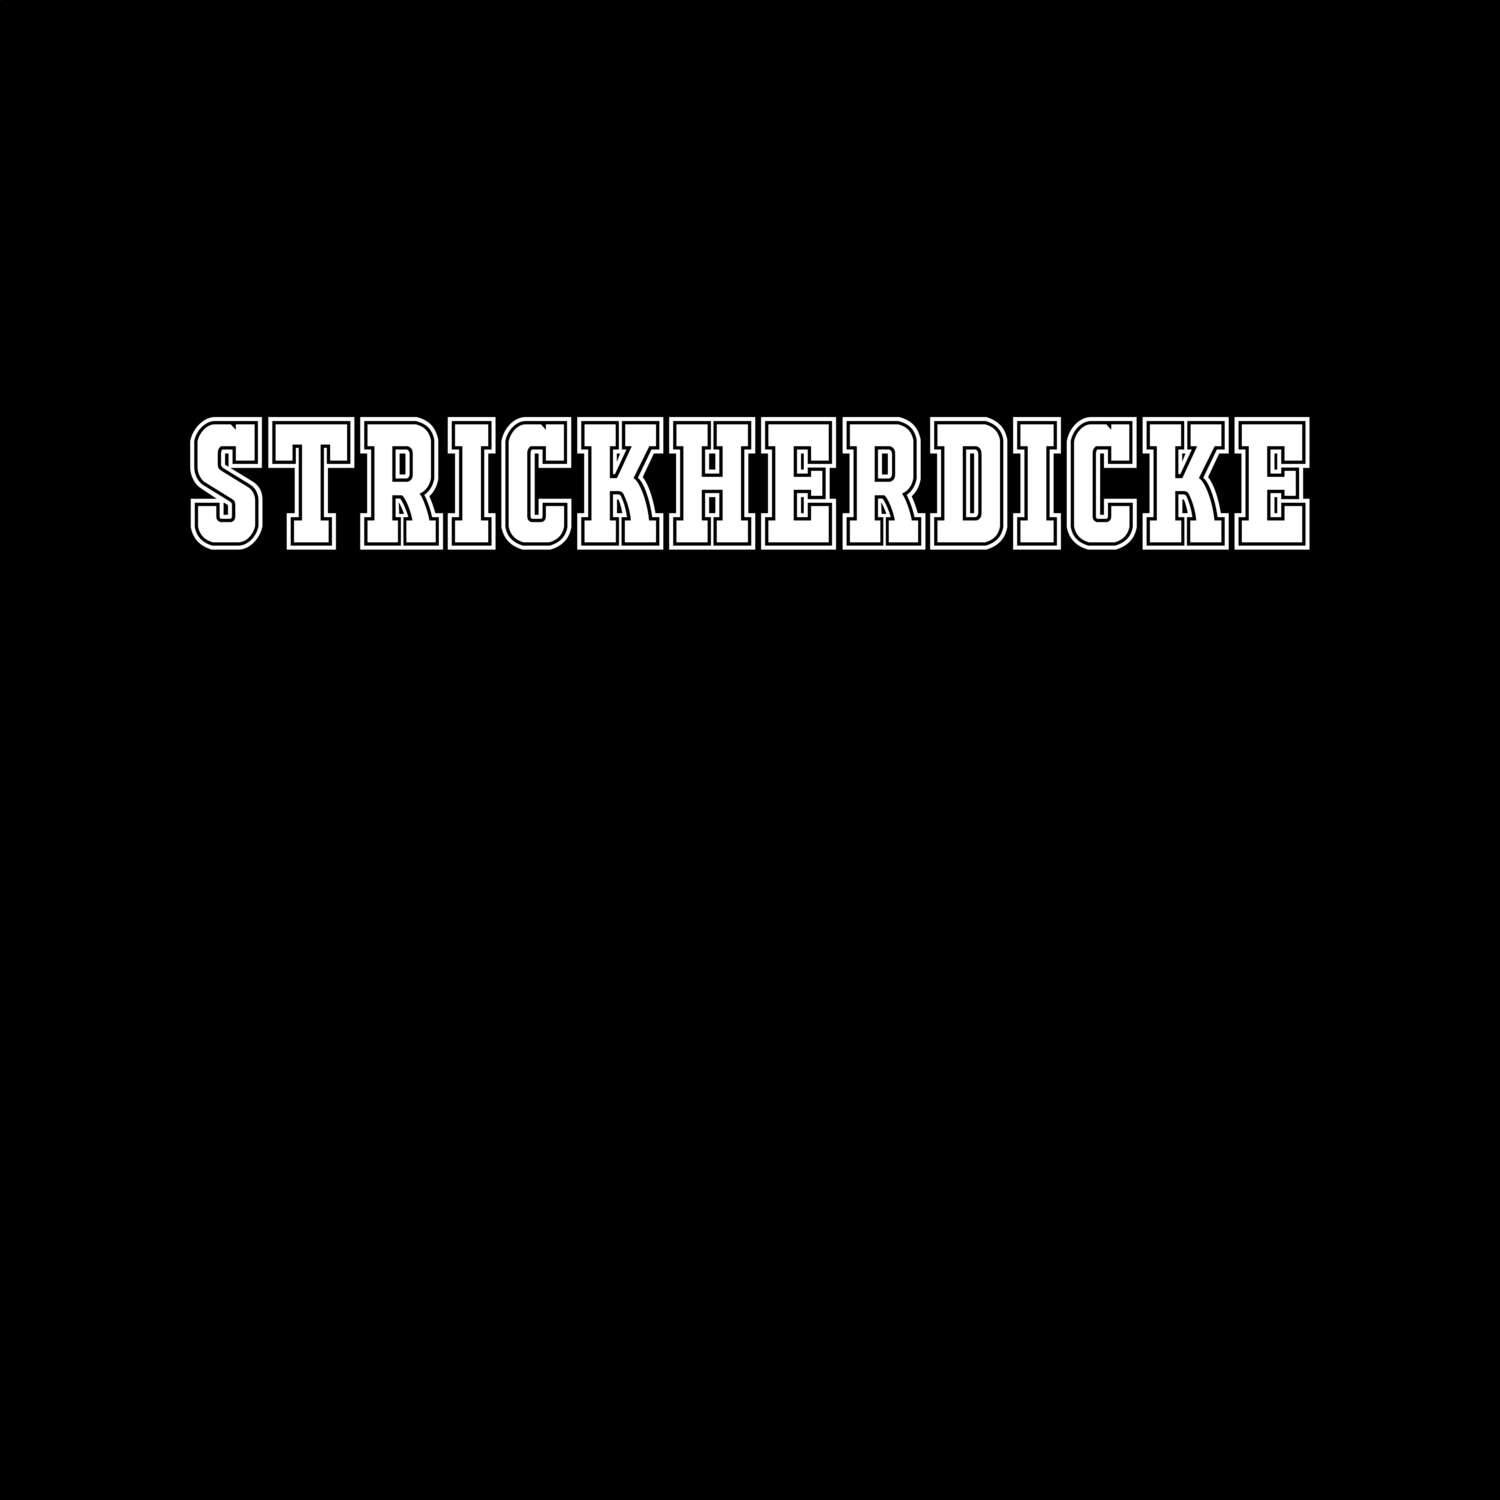 Strickherdicke T-Shirt »Classic«